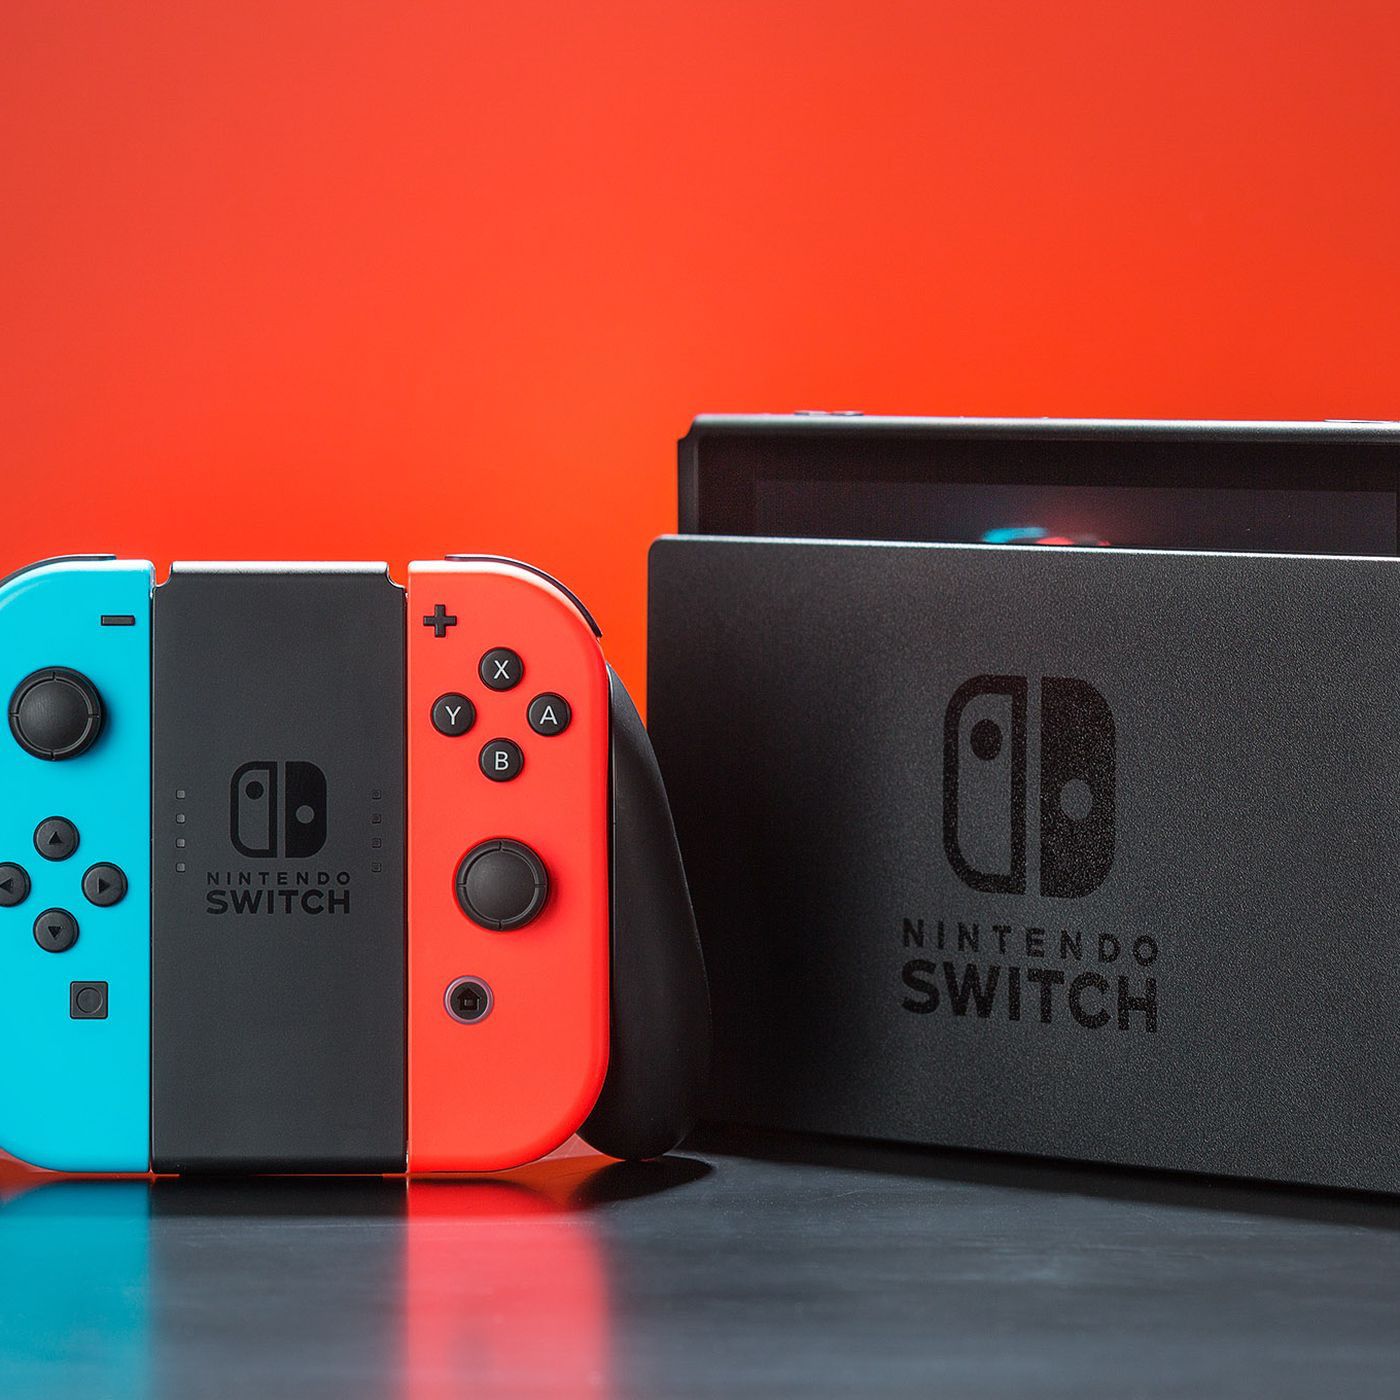 Nintendo switch brand new in box